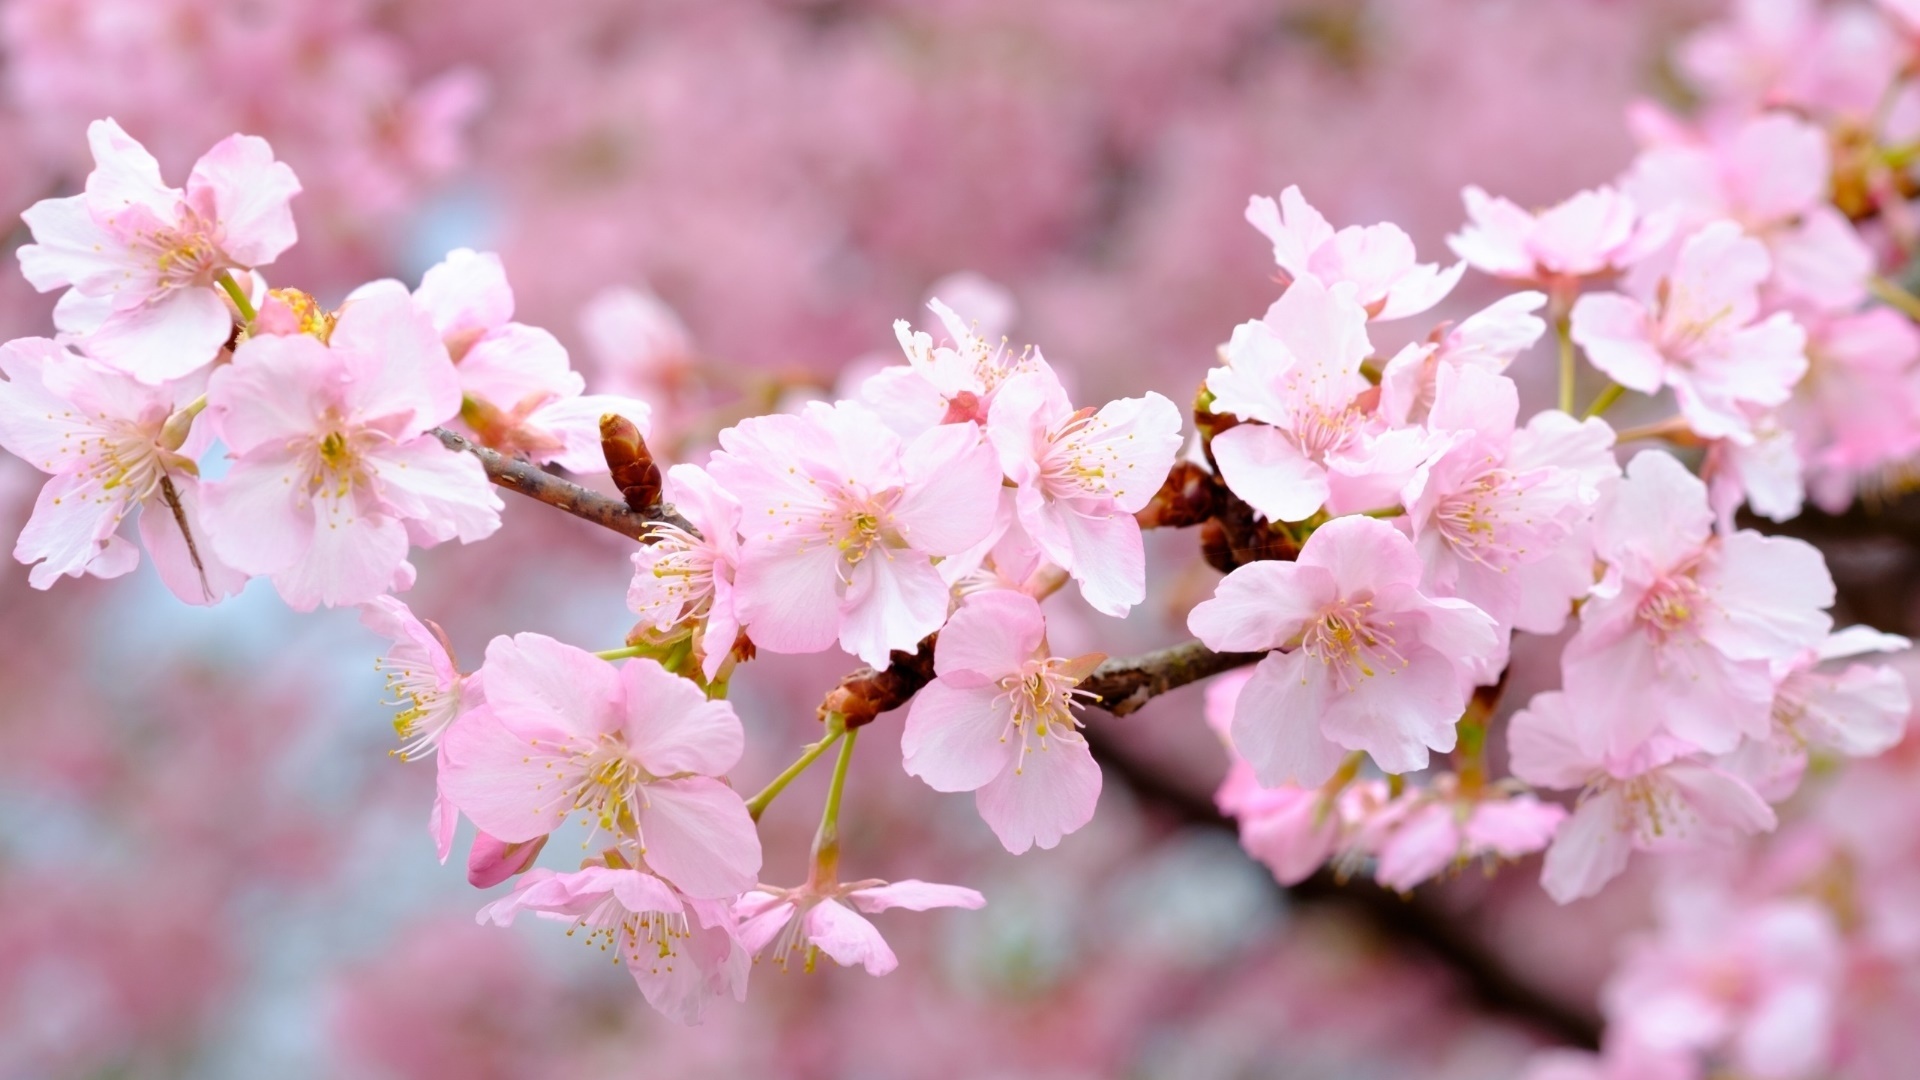 Sakura Blossom wallpaper for computer